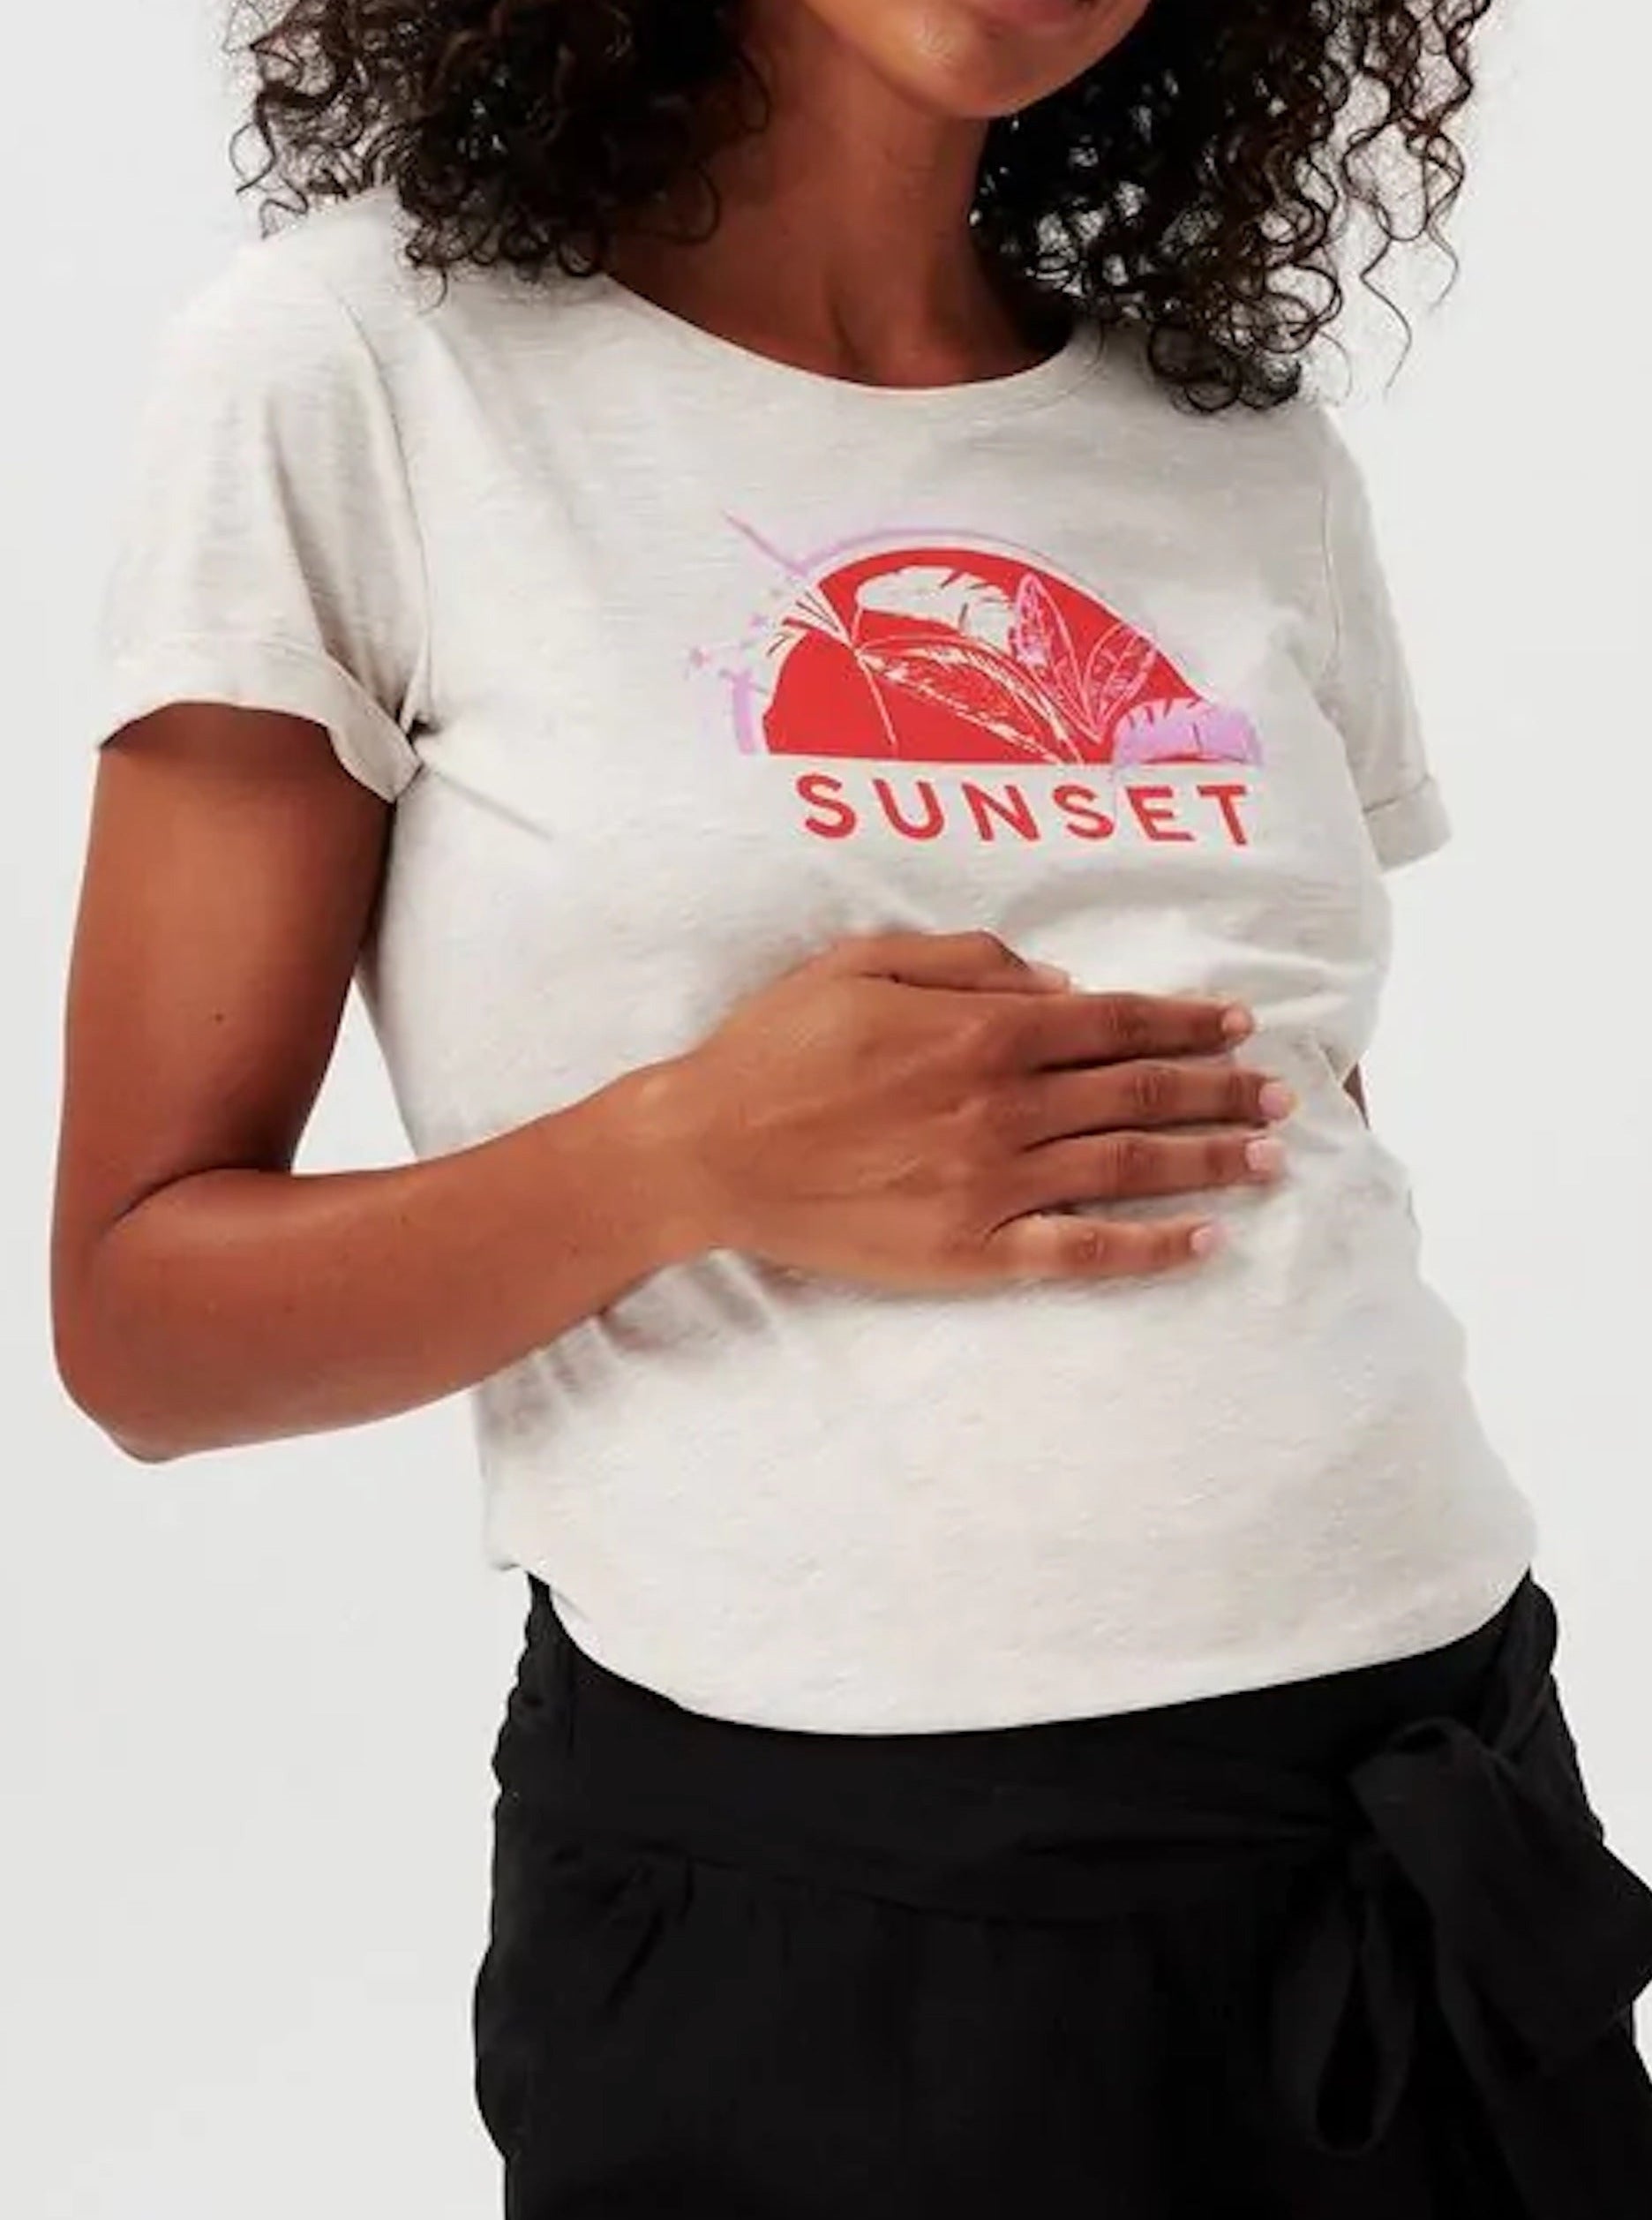 Sunset maternity t-shirt